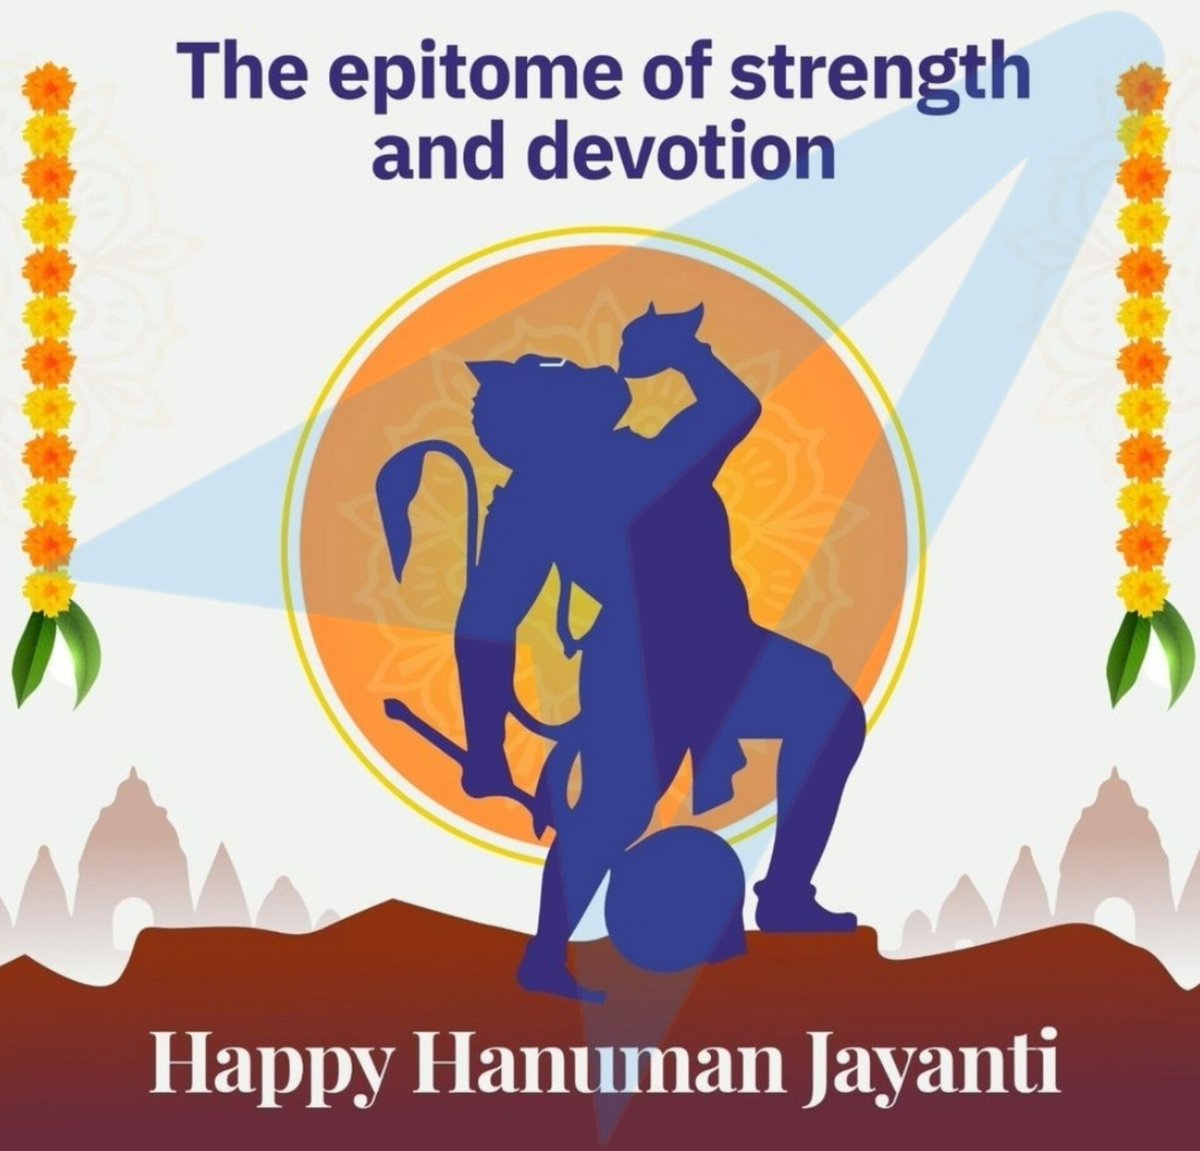 #happyhanumanjayanti #hanumanjayanti #bajrangbali #lordhanuman #lordbalaji #businessconsultant #pkibc #learn #ExponentialSuccess #growth